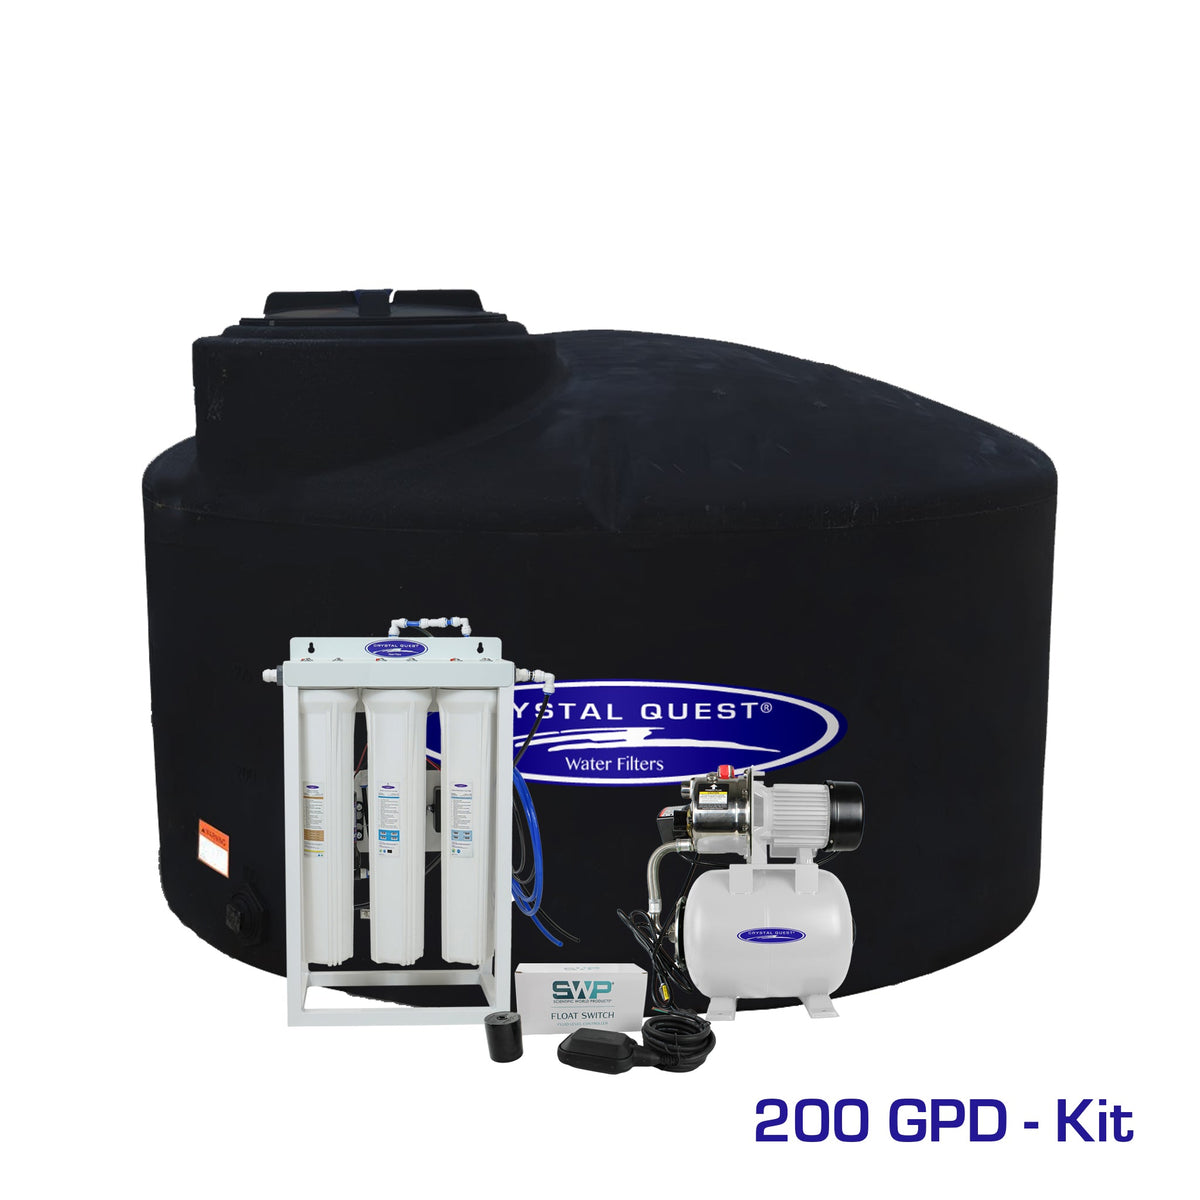 200 GPD / Add Storage Tank Kit (550 Gal) Whole House Reverse Osmosis System - Reverse Osmosis System - Crystal Quest